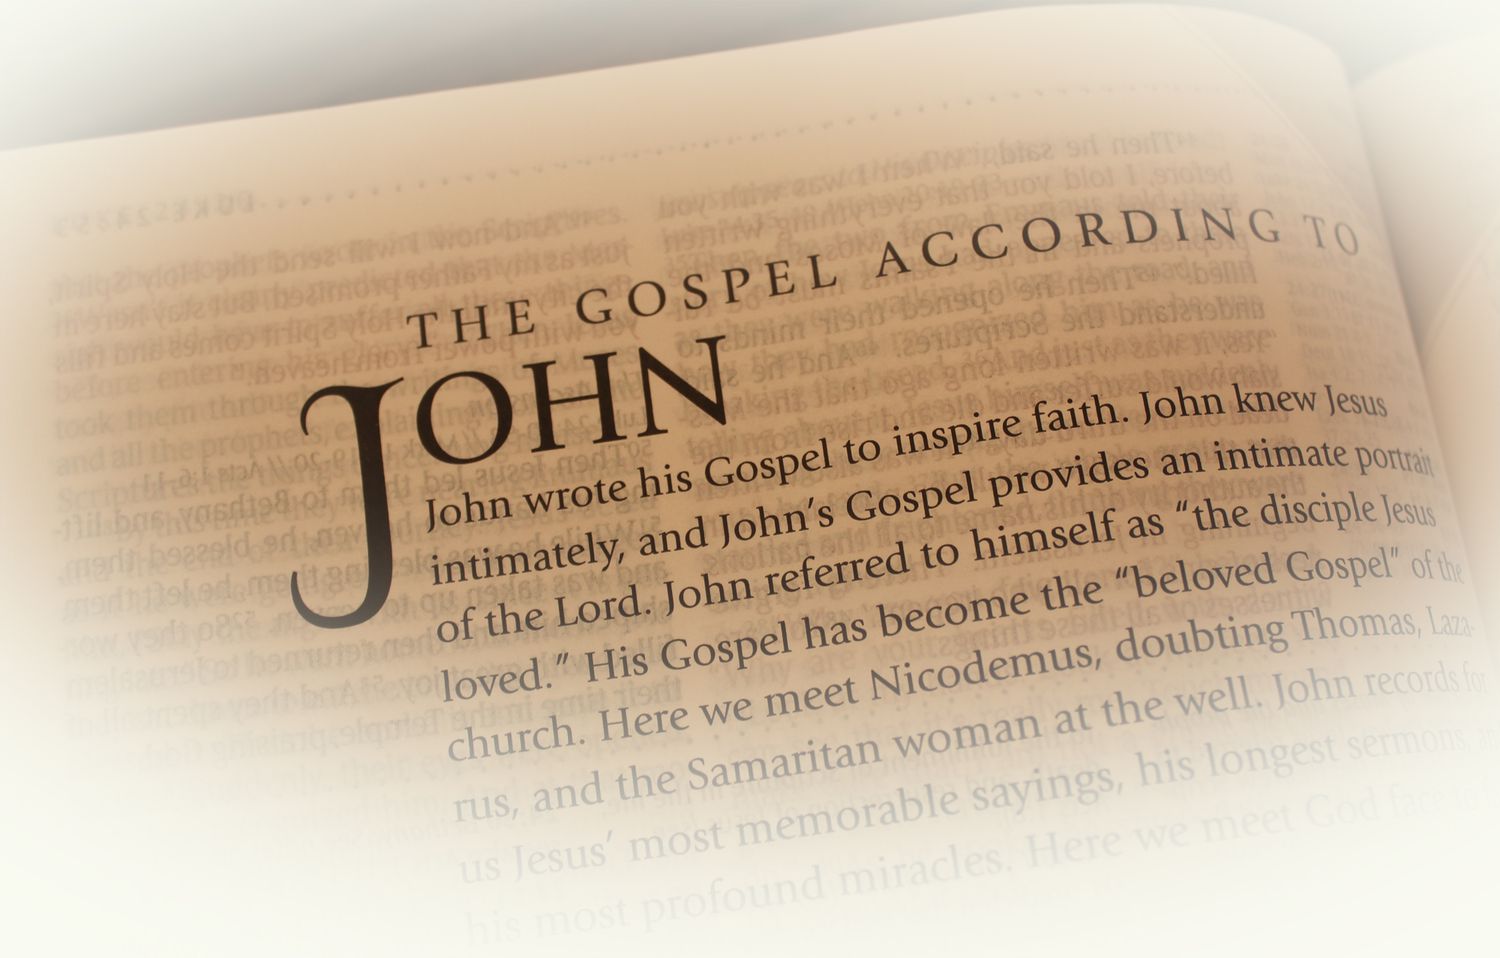 The Gospel According to John: A Study on the Life of Jesus hero image